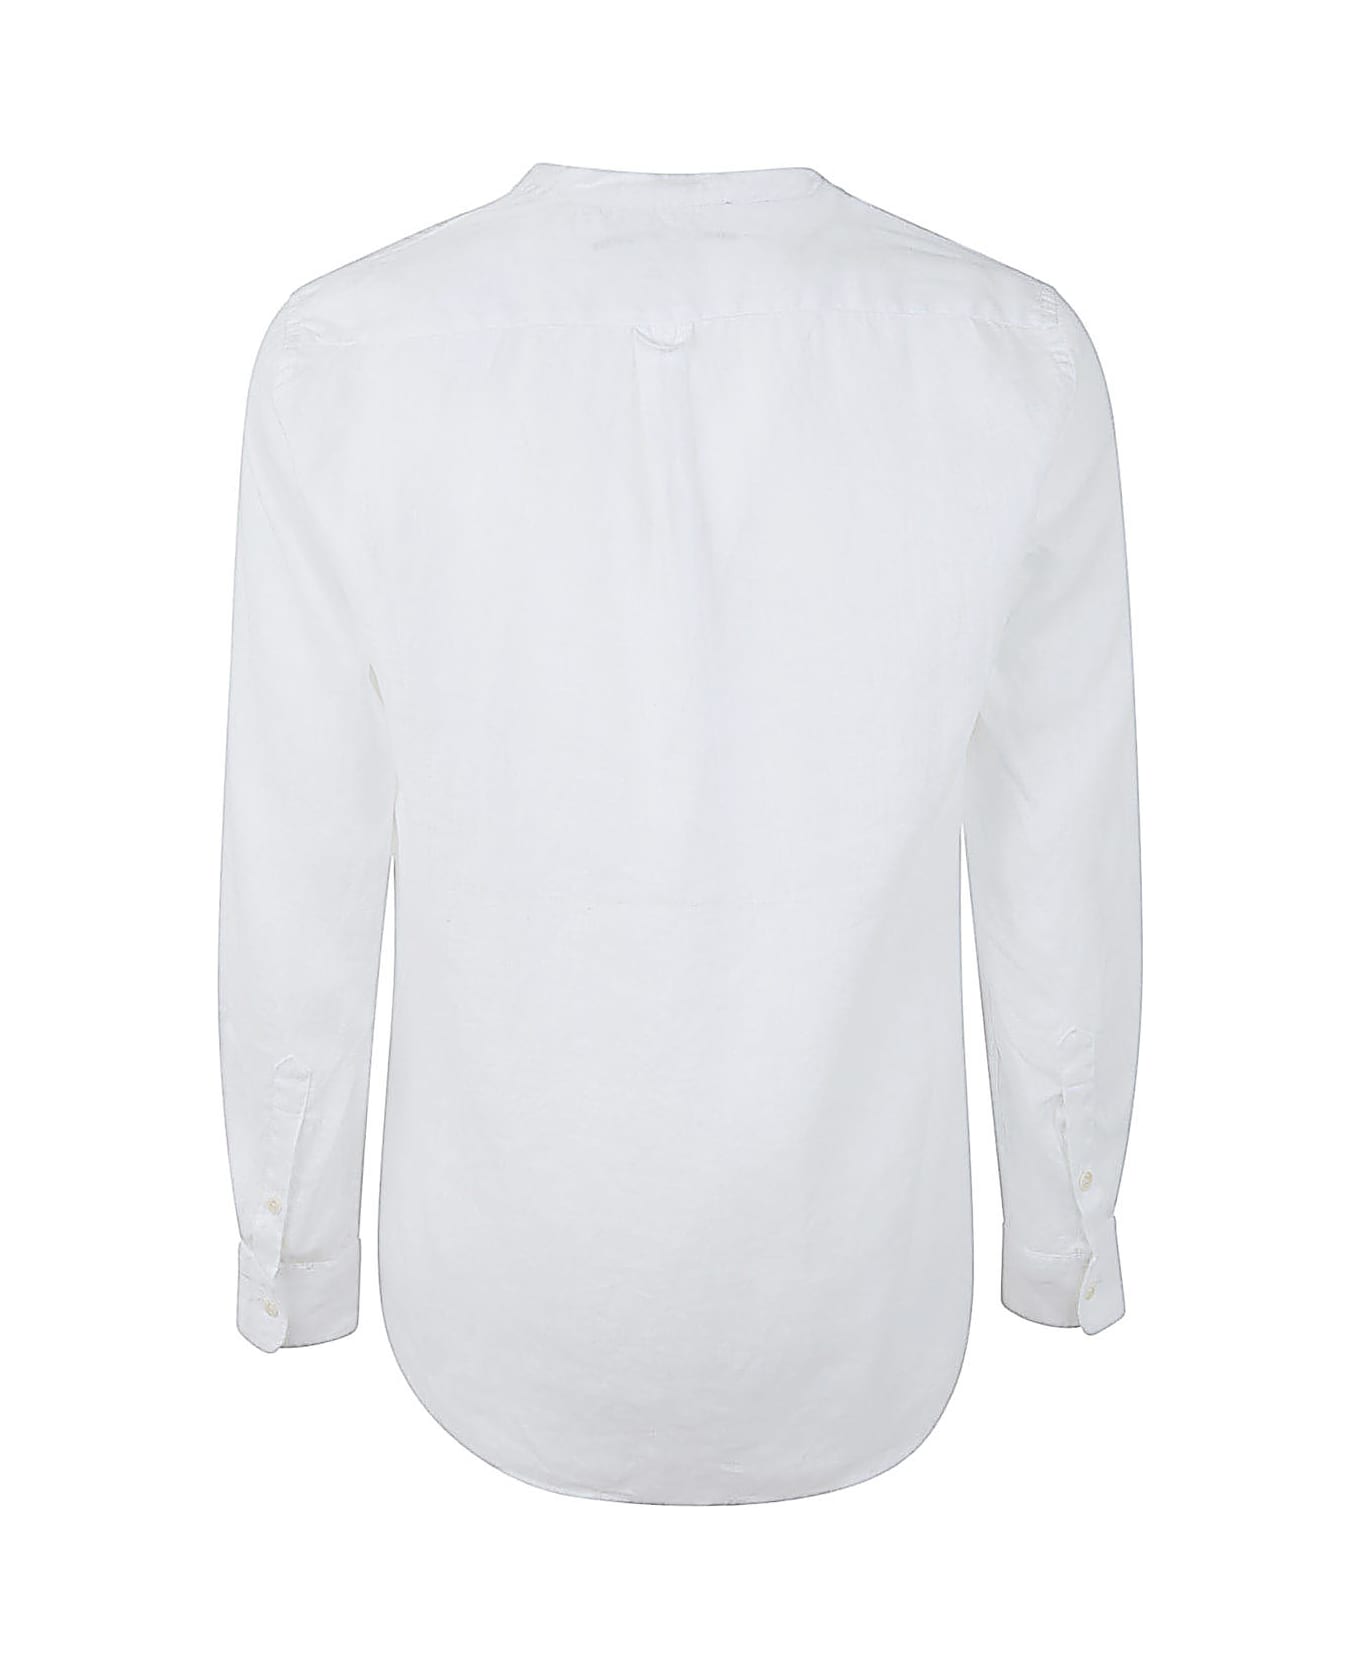 Original Vintage Style Corean Collar Shirt - White シャツ